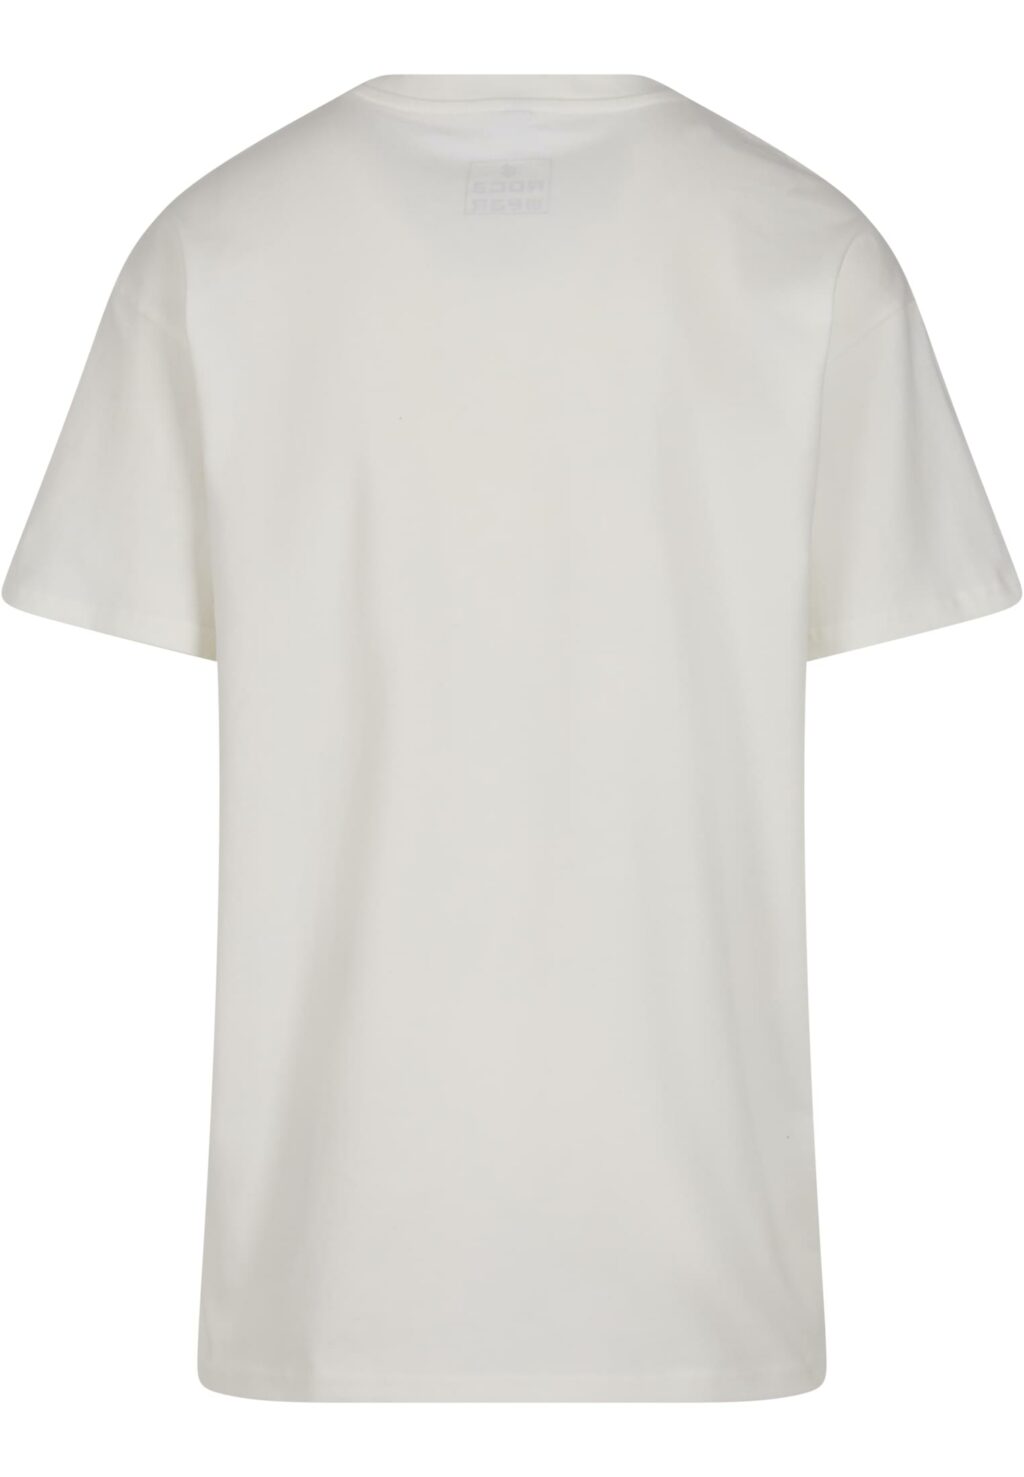 Rocawear Nonchalance T-Shirt ready for dye RWTS088T